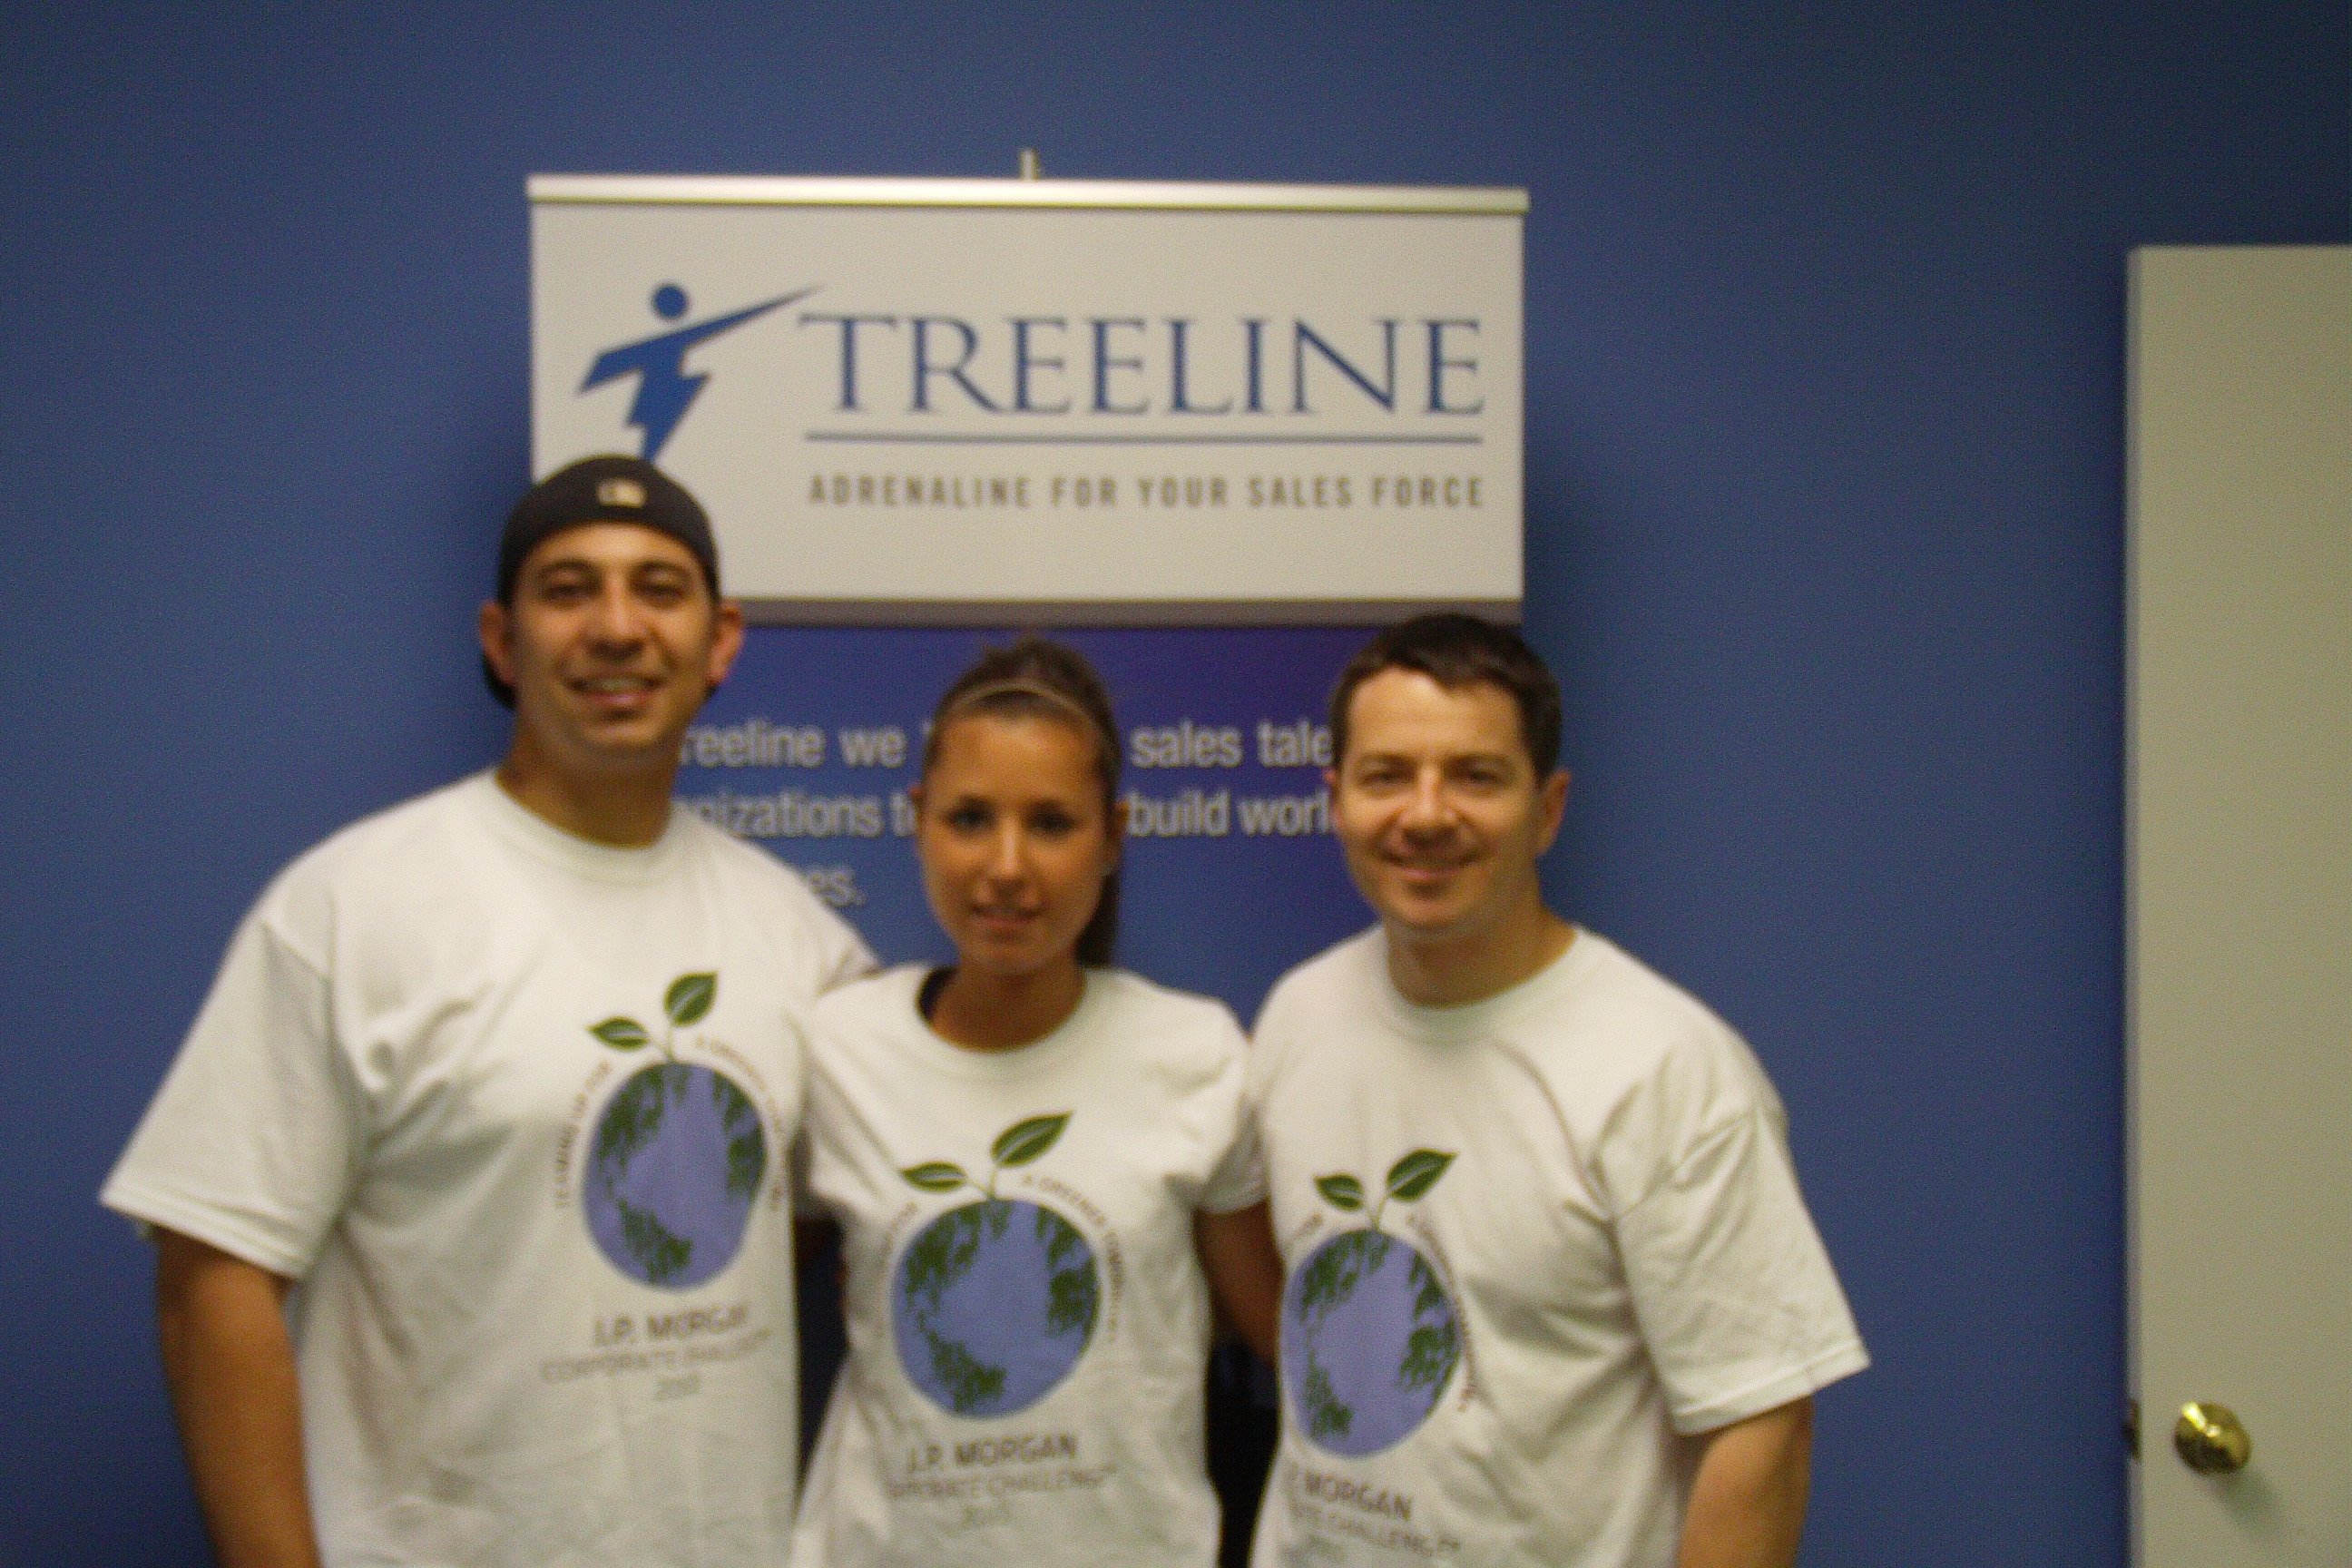 Treeline Inc. runs the JP Morgan Corporate Challenge Race